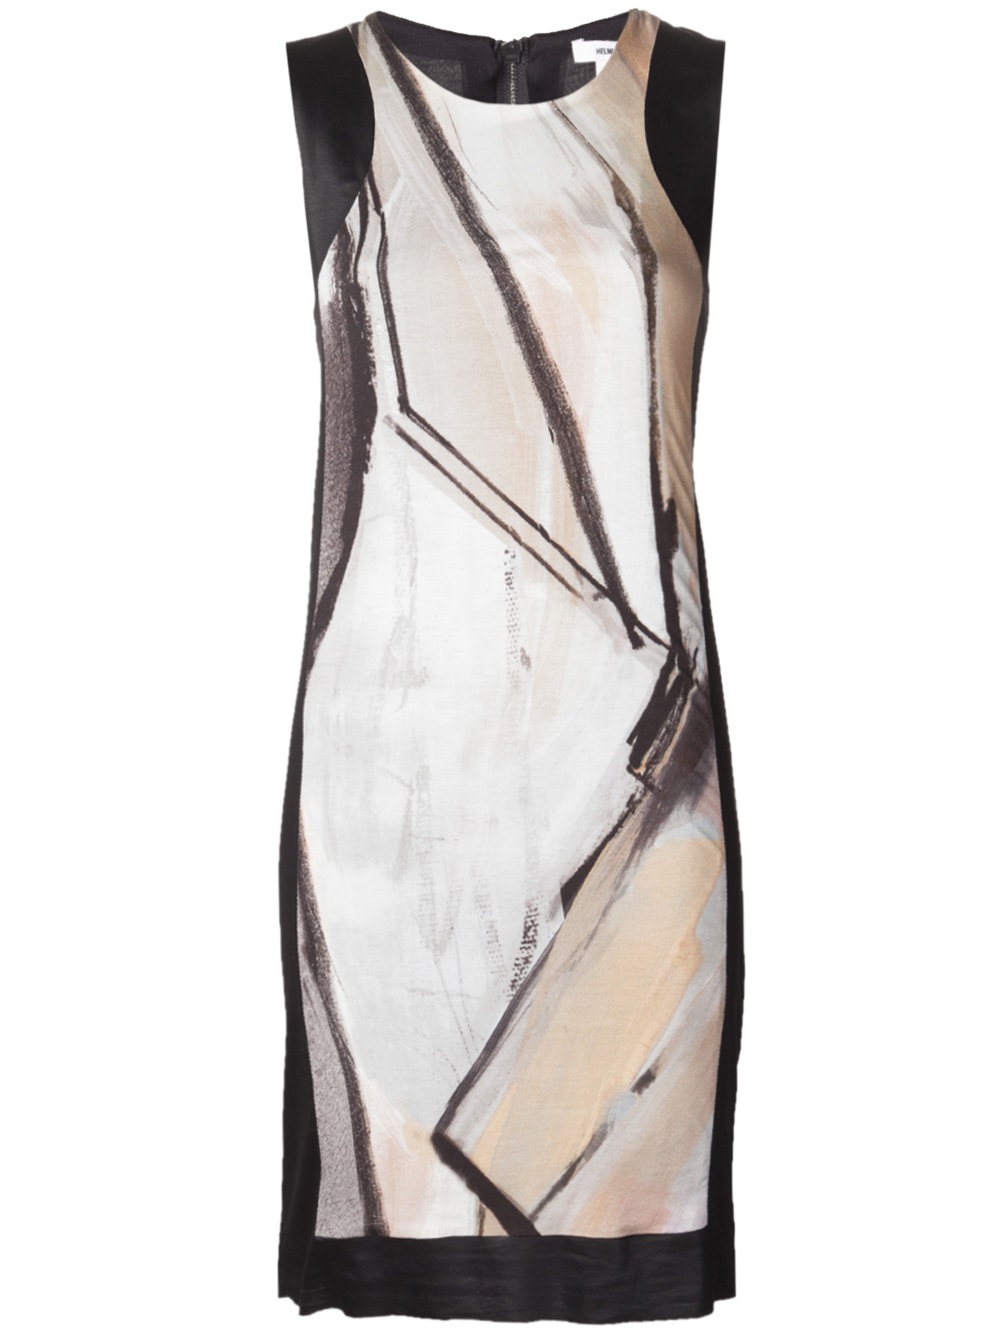 Lyst - Helmut lang Abstract Print Dress